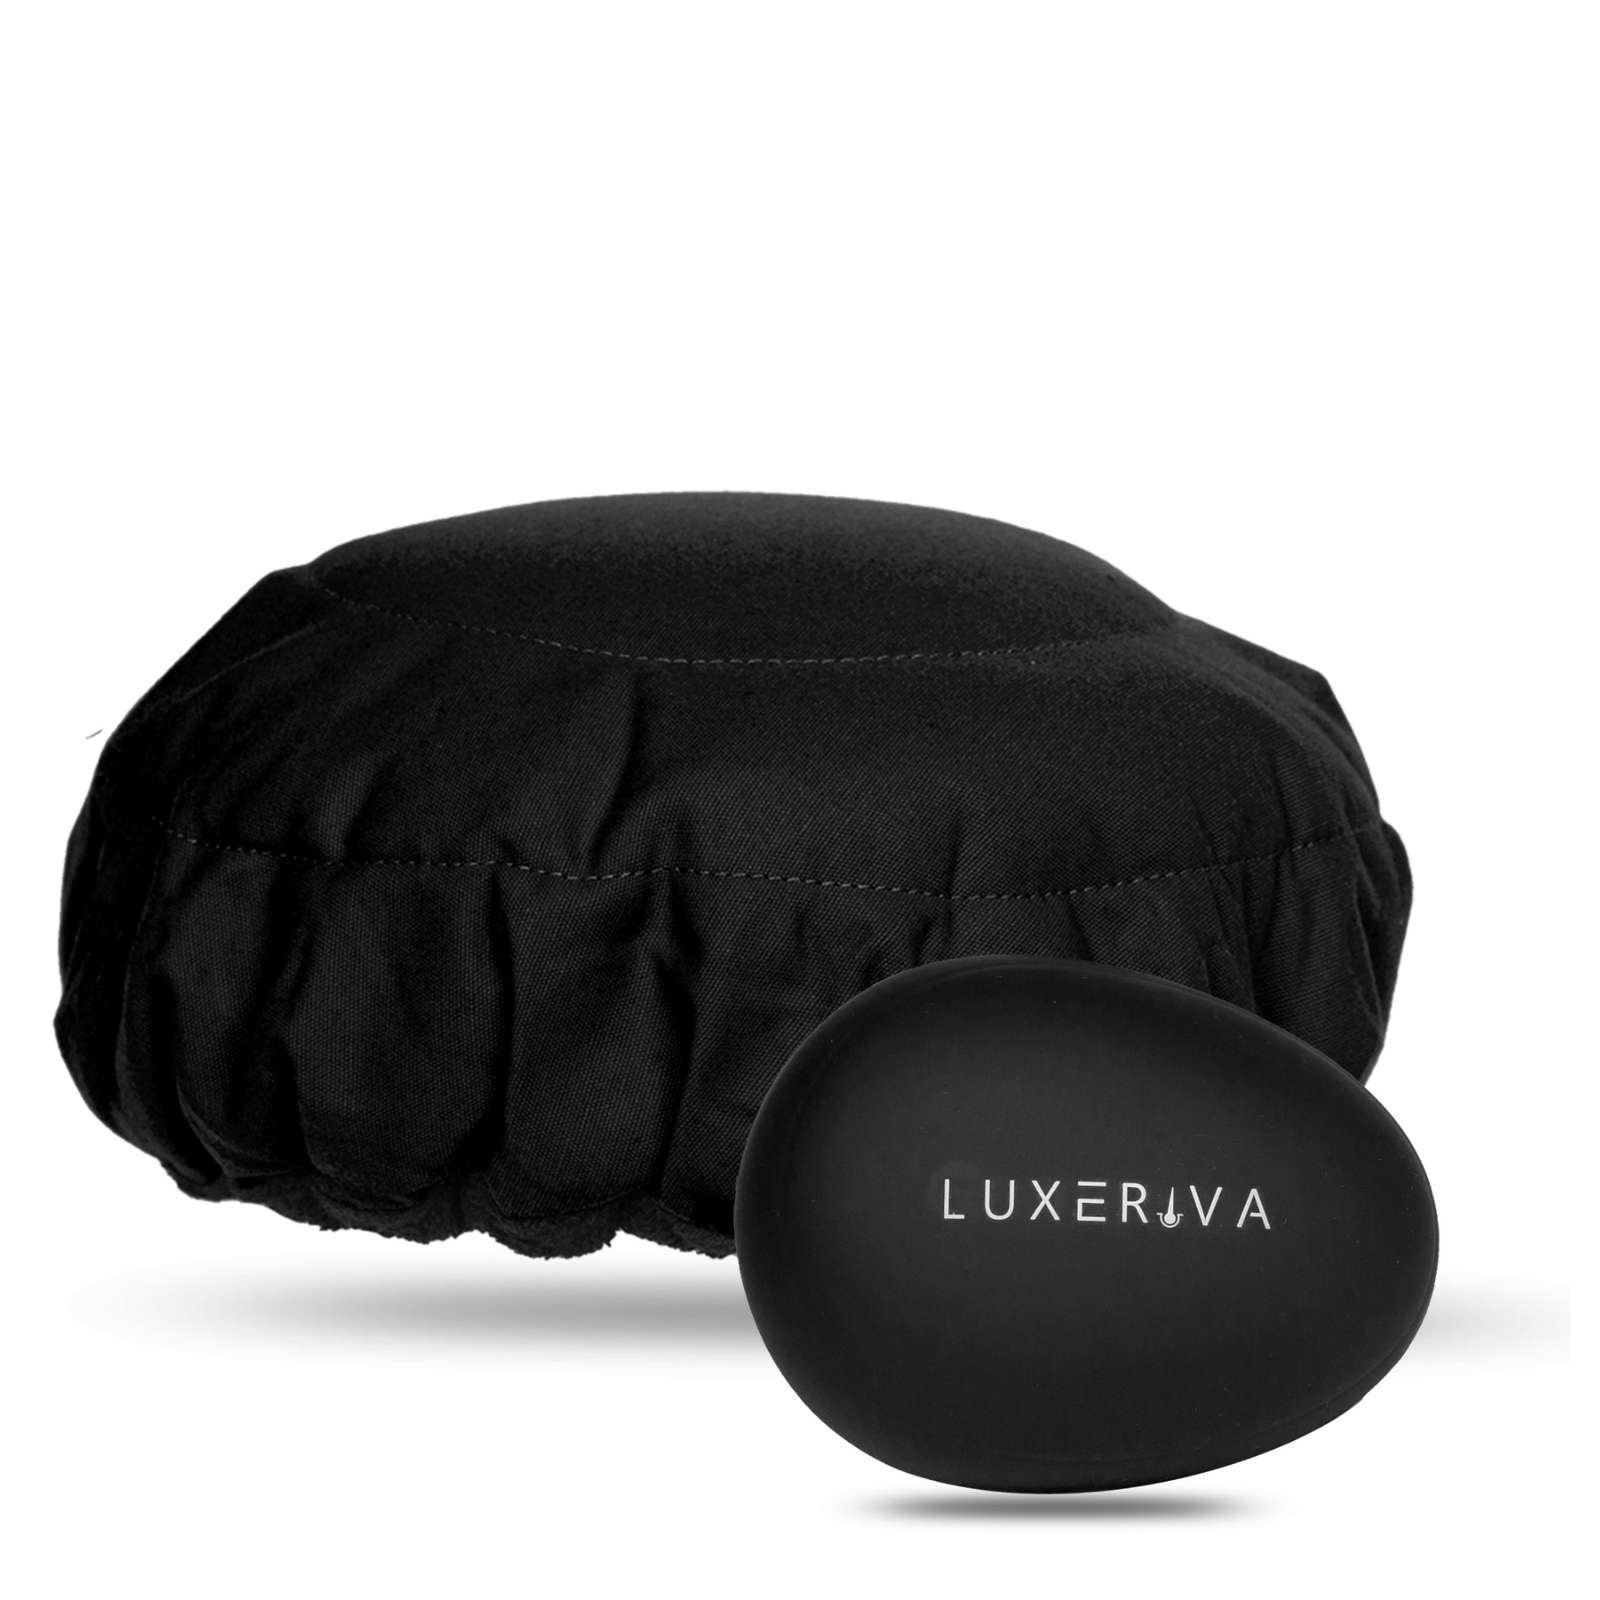 Lava Cap microwavable heat cap UK stock, with detangling hairbrush in Black Onyx